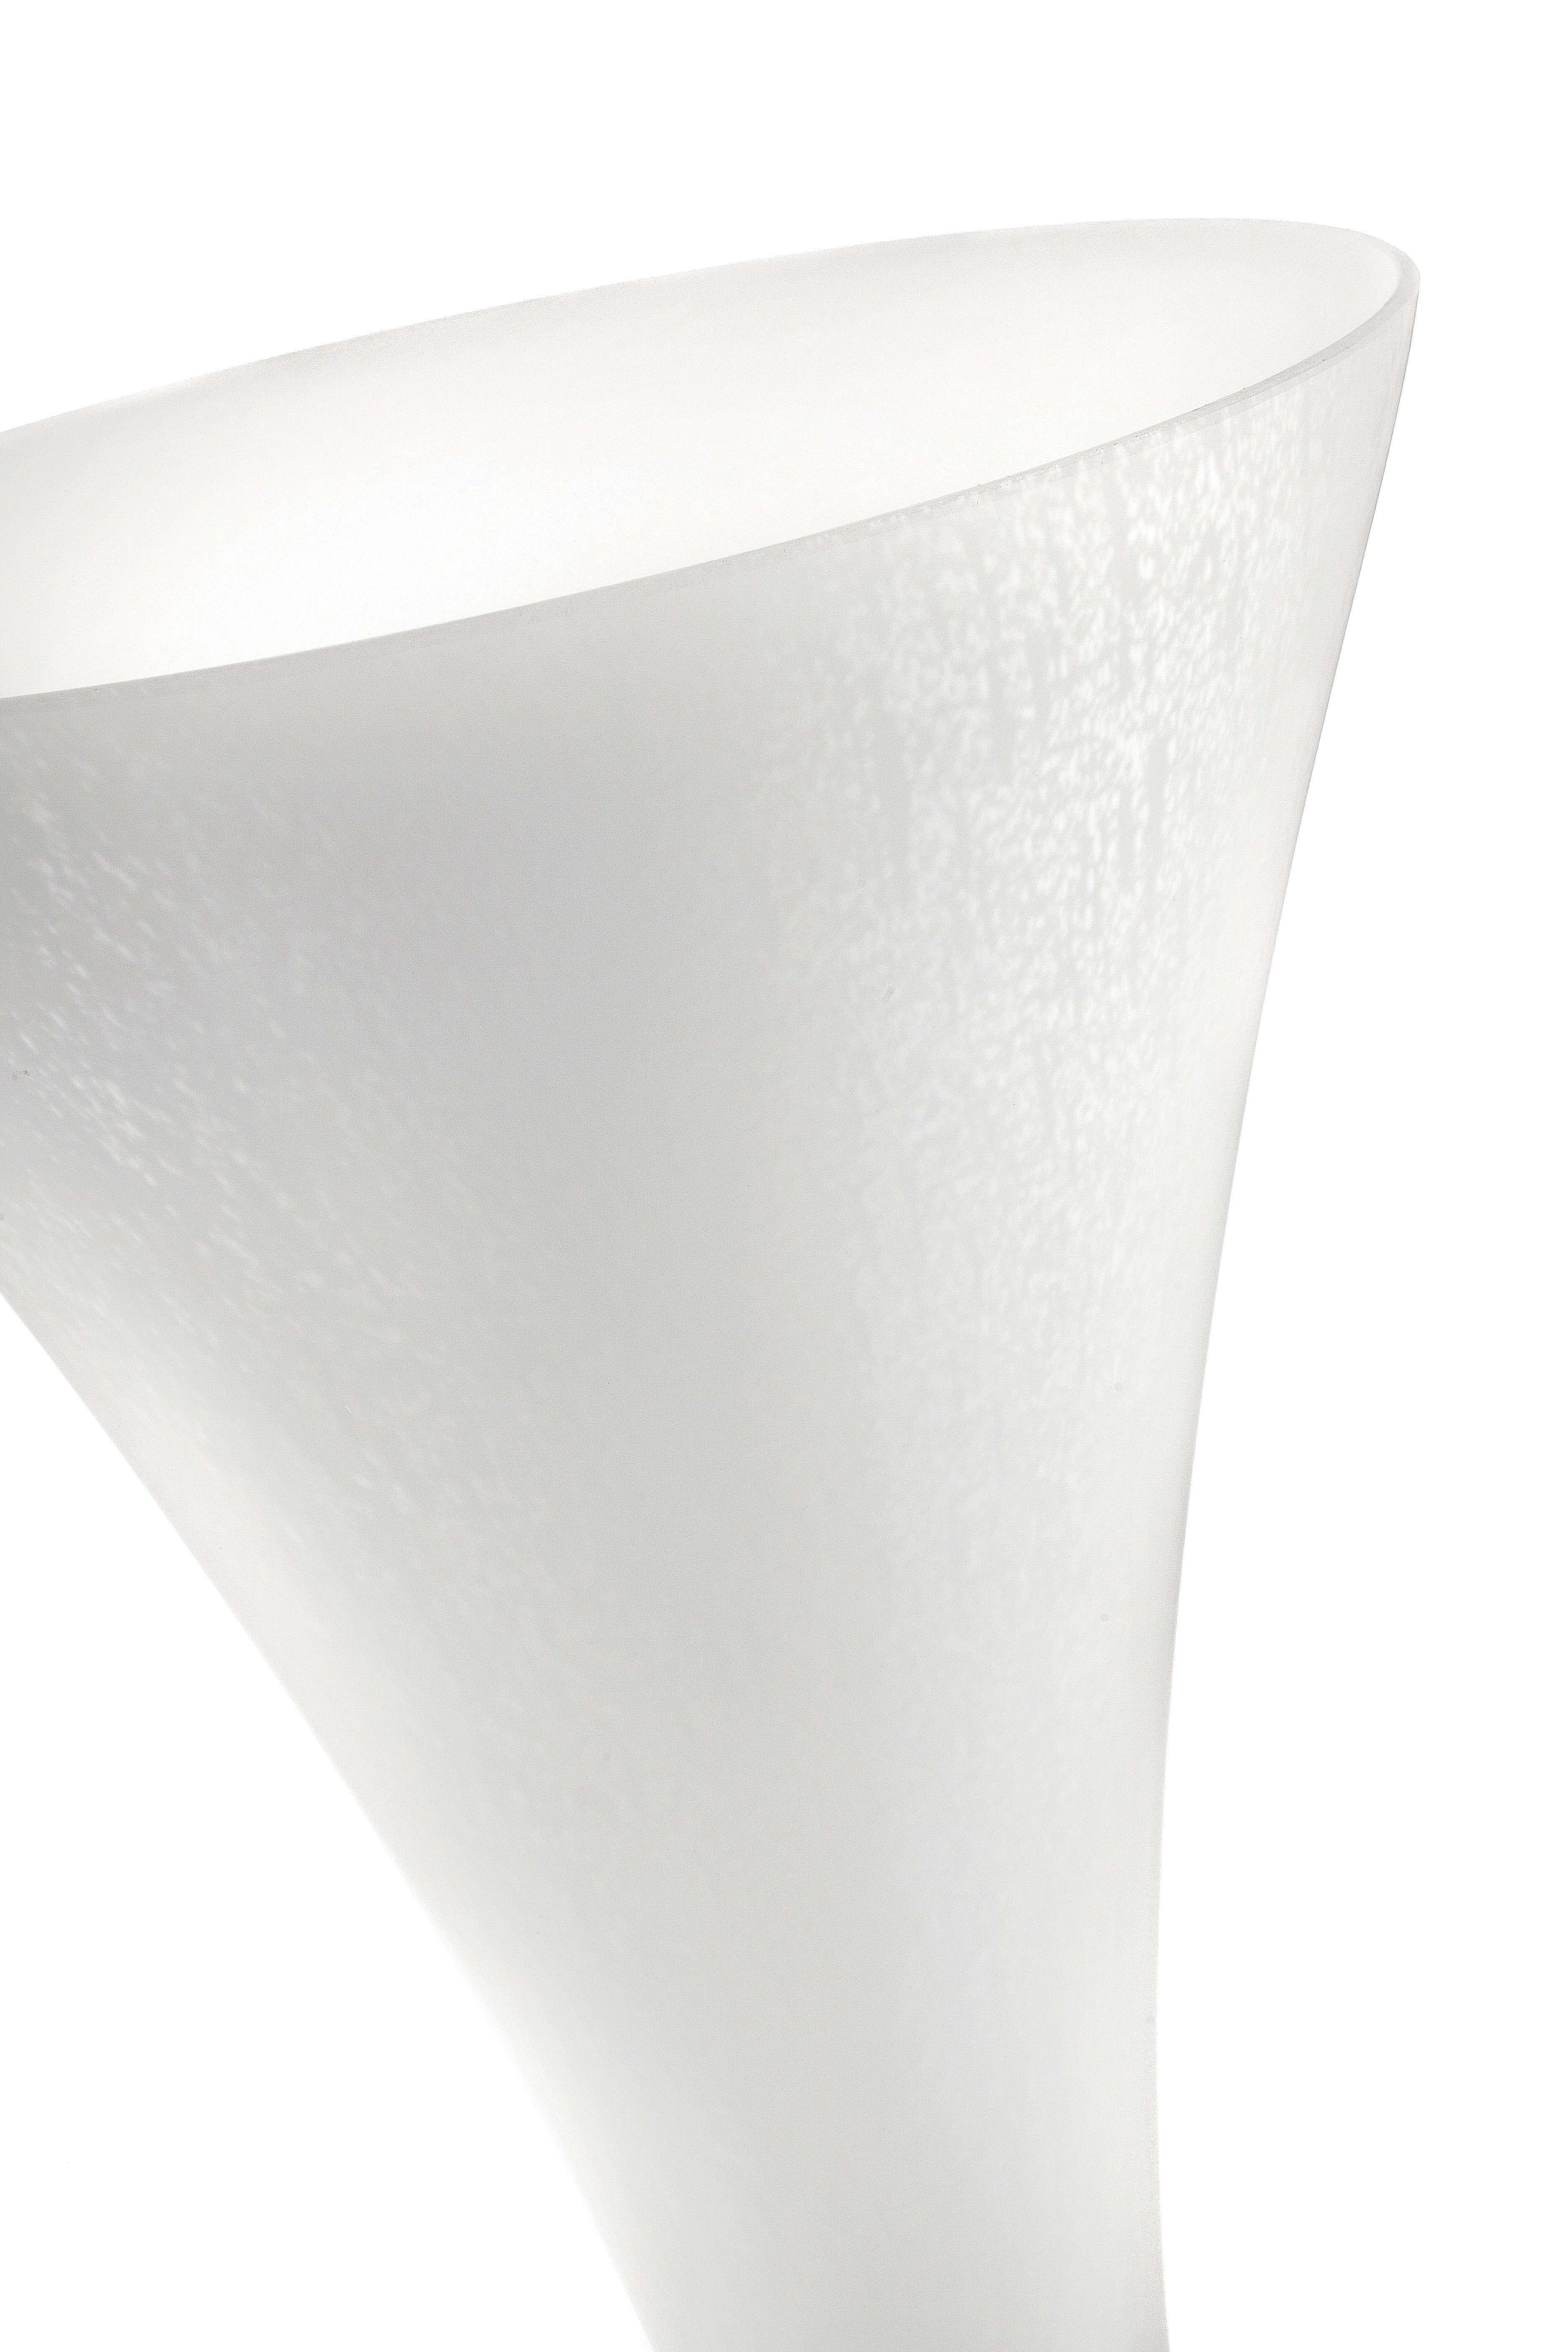 Modern Vistosi Lepanto SP Suspension Light in White Glass by Luciano Vistosi For Sale